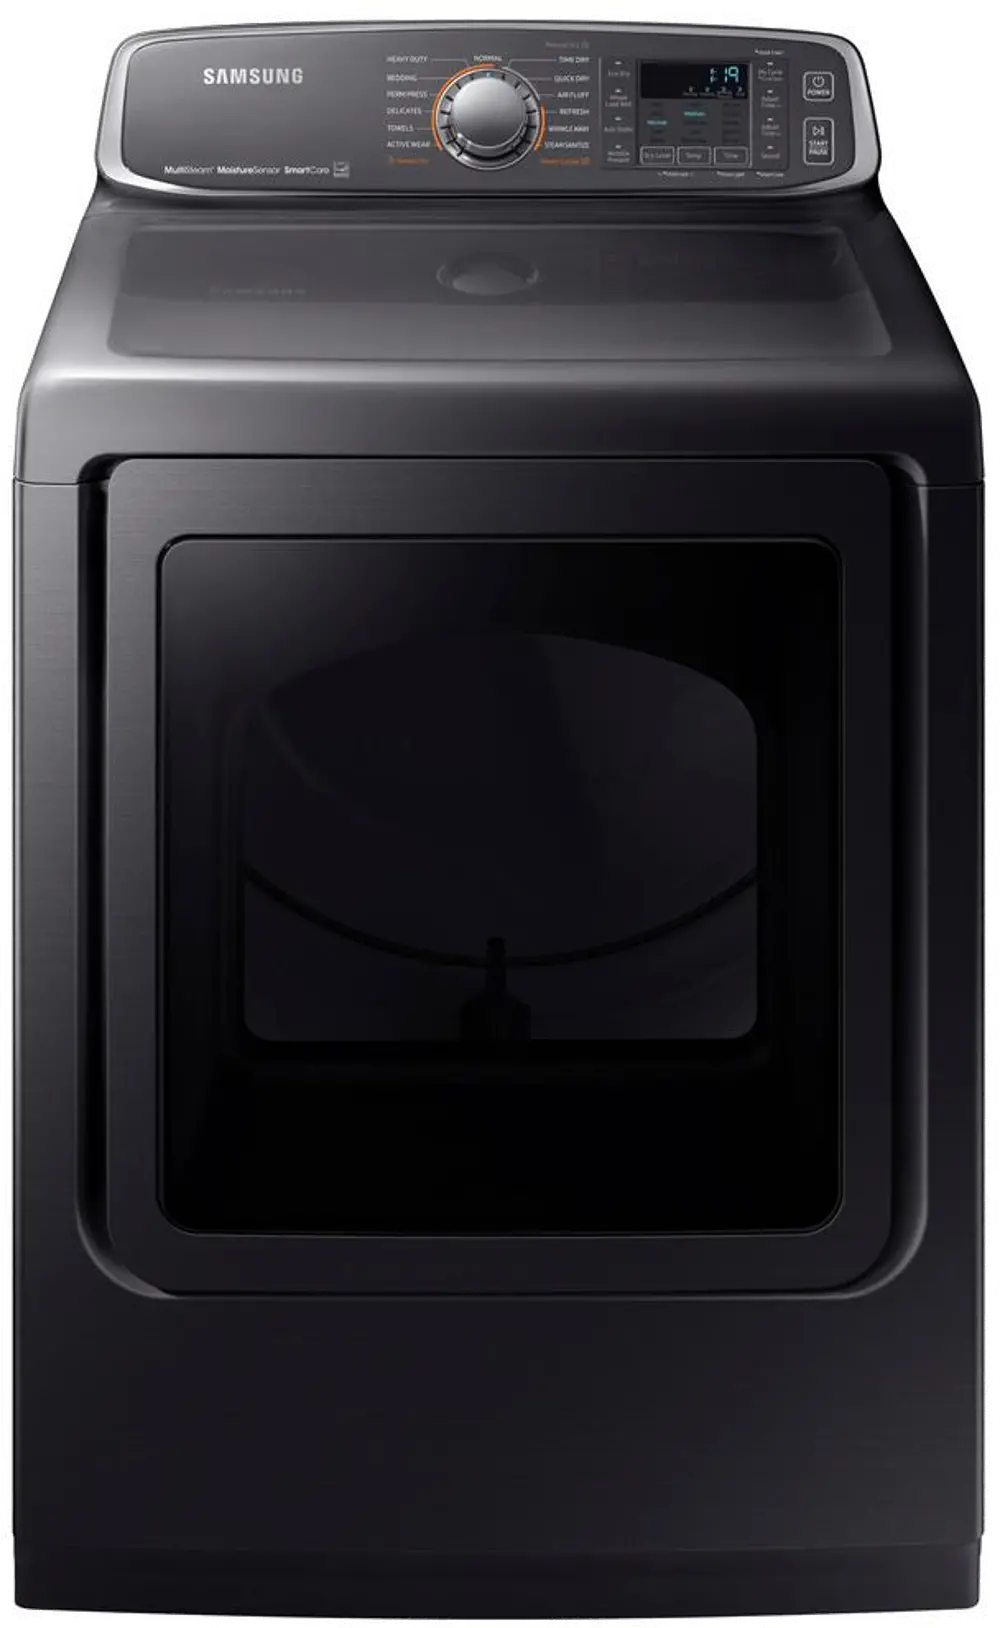 DVE52M7750V Samsung Electric Eco Dry Dryer - 7.4 cu. ft. Black Stainless Steel-1